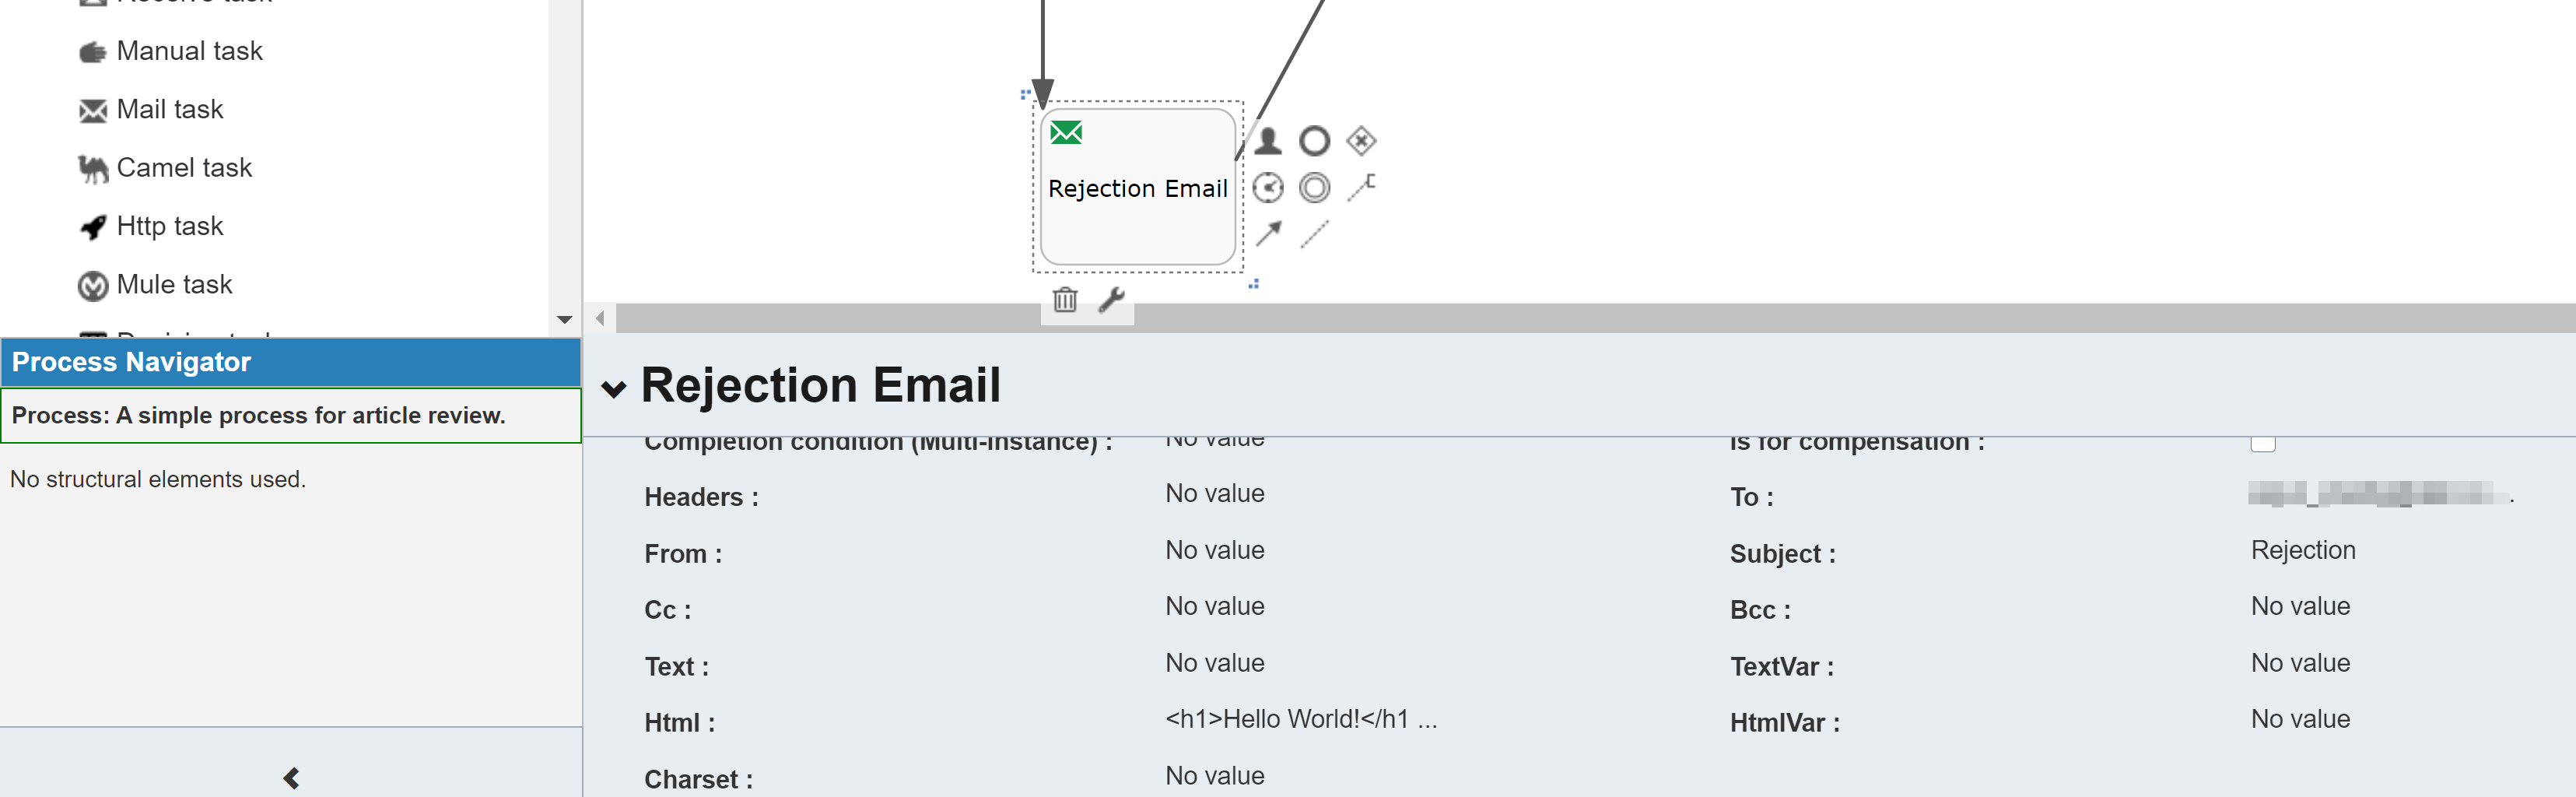 flowable-email-task